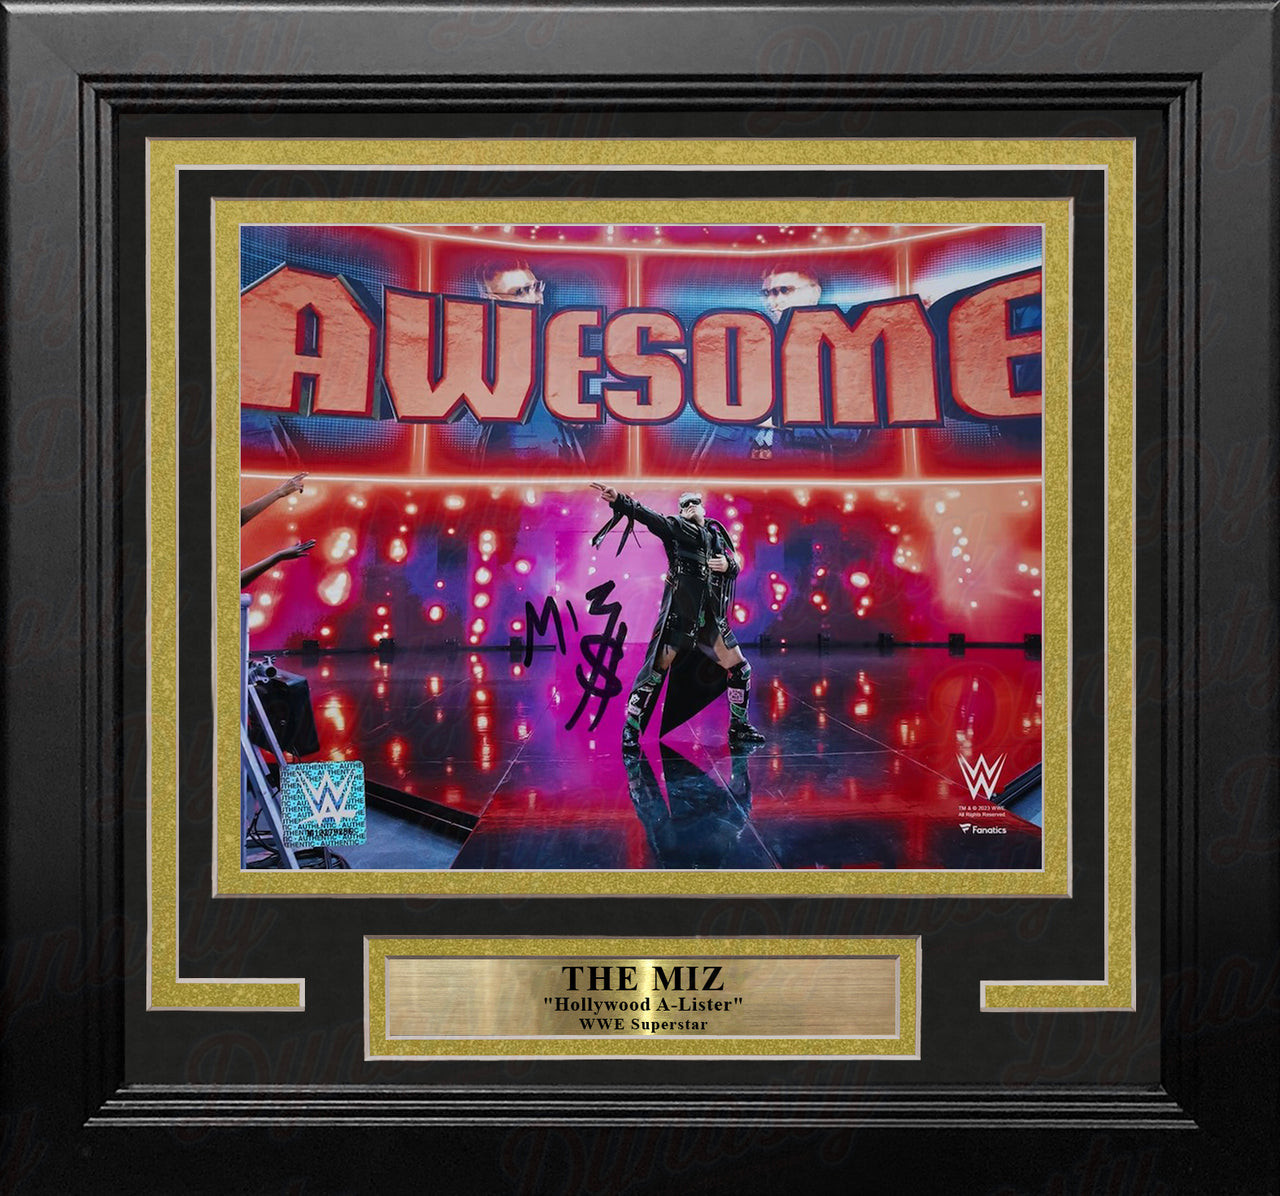 The Miz Awesome Entrance Autographed 8" x 10" Framed WWE Wrestling Photo